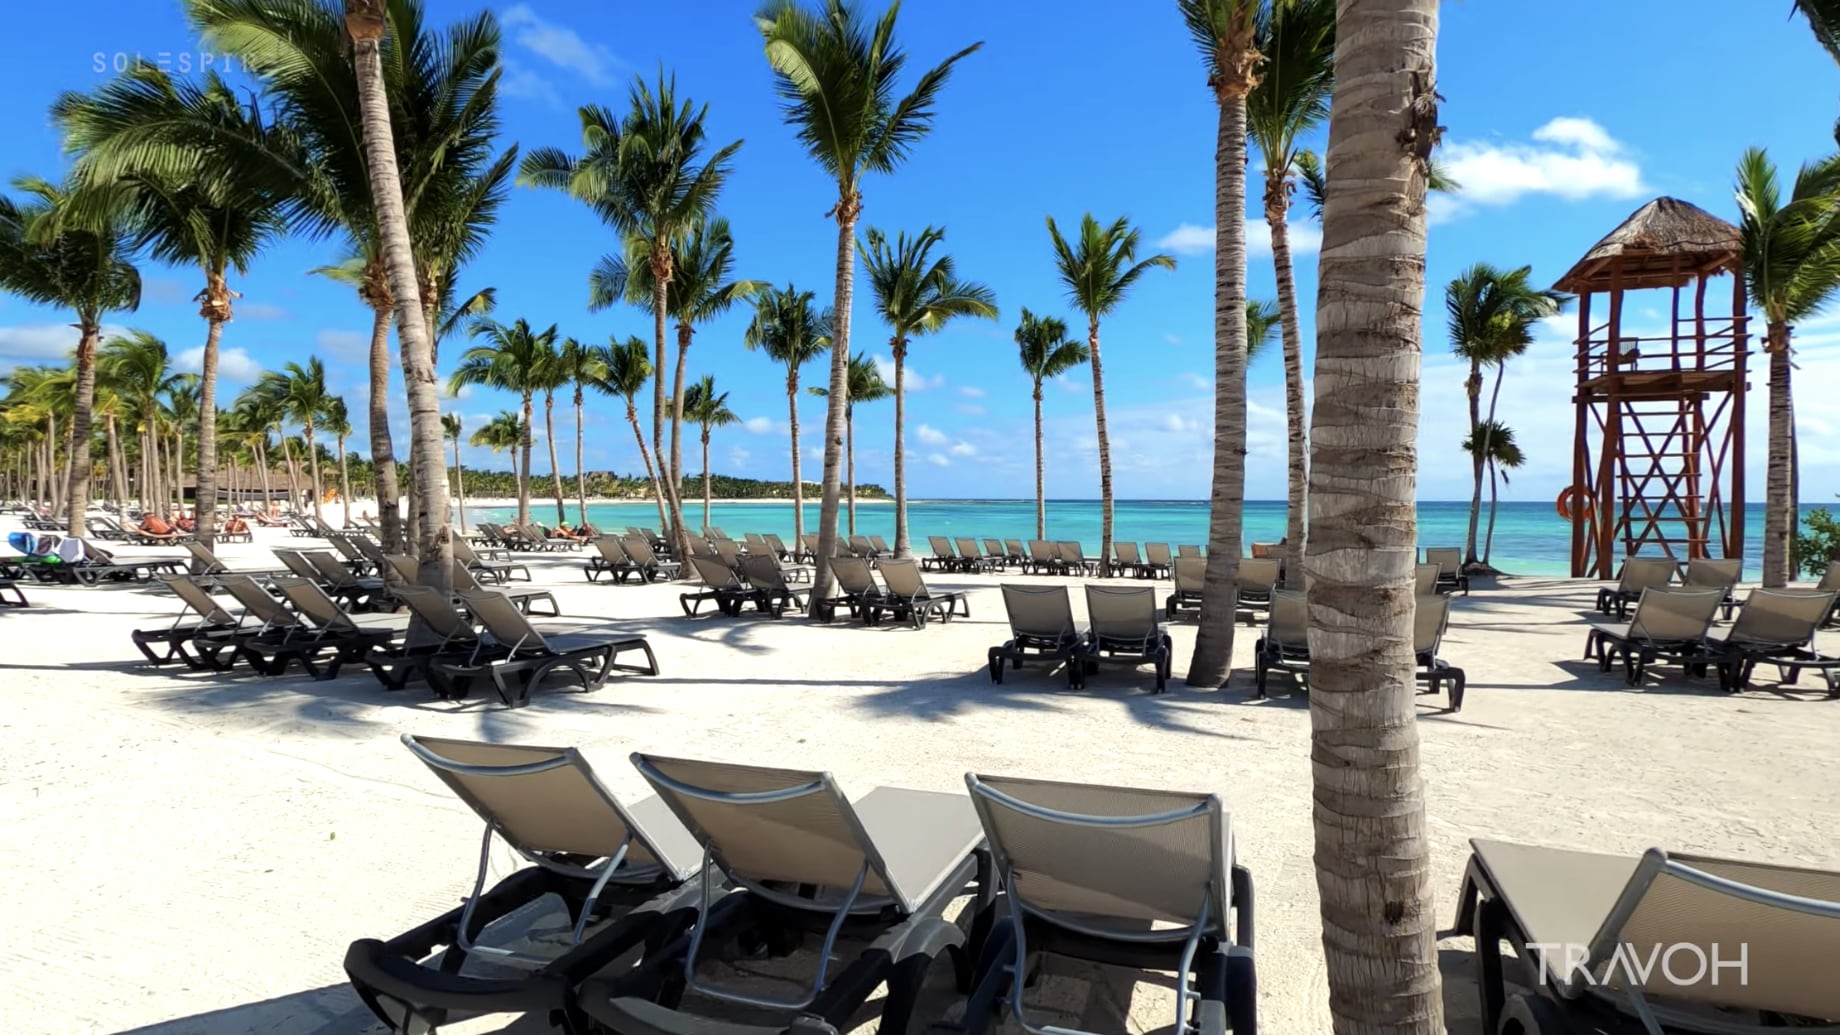 20 Minute Walk - Resort Beach - Tropical Waves - Barcelo Maya Riviera Hotels, Mexico - 4K Travel